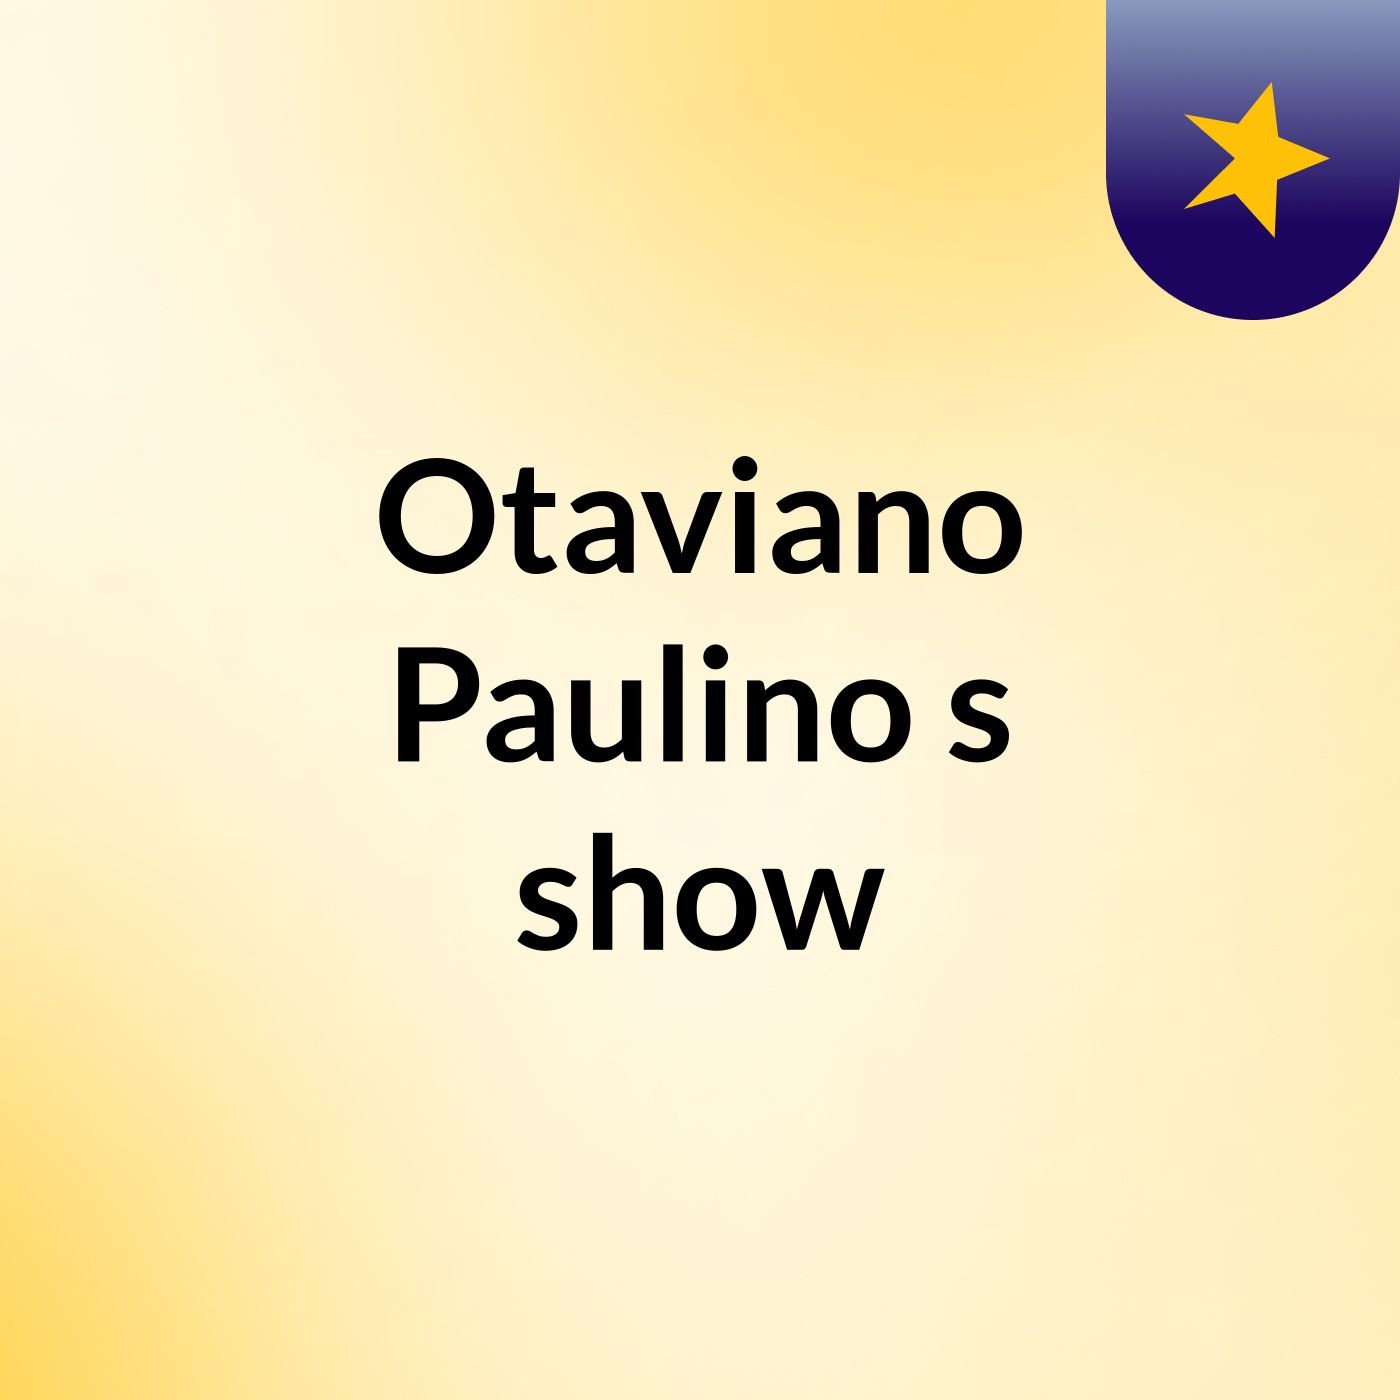 Episódio 37 - Otaviano Paulino's show